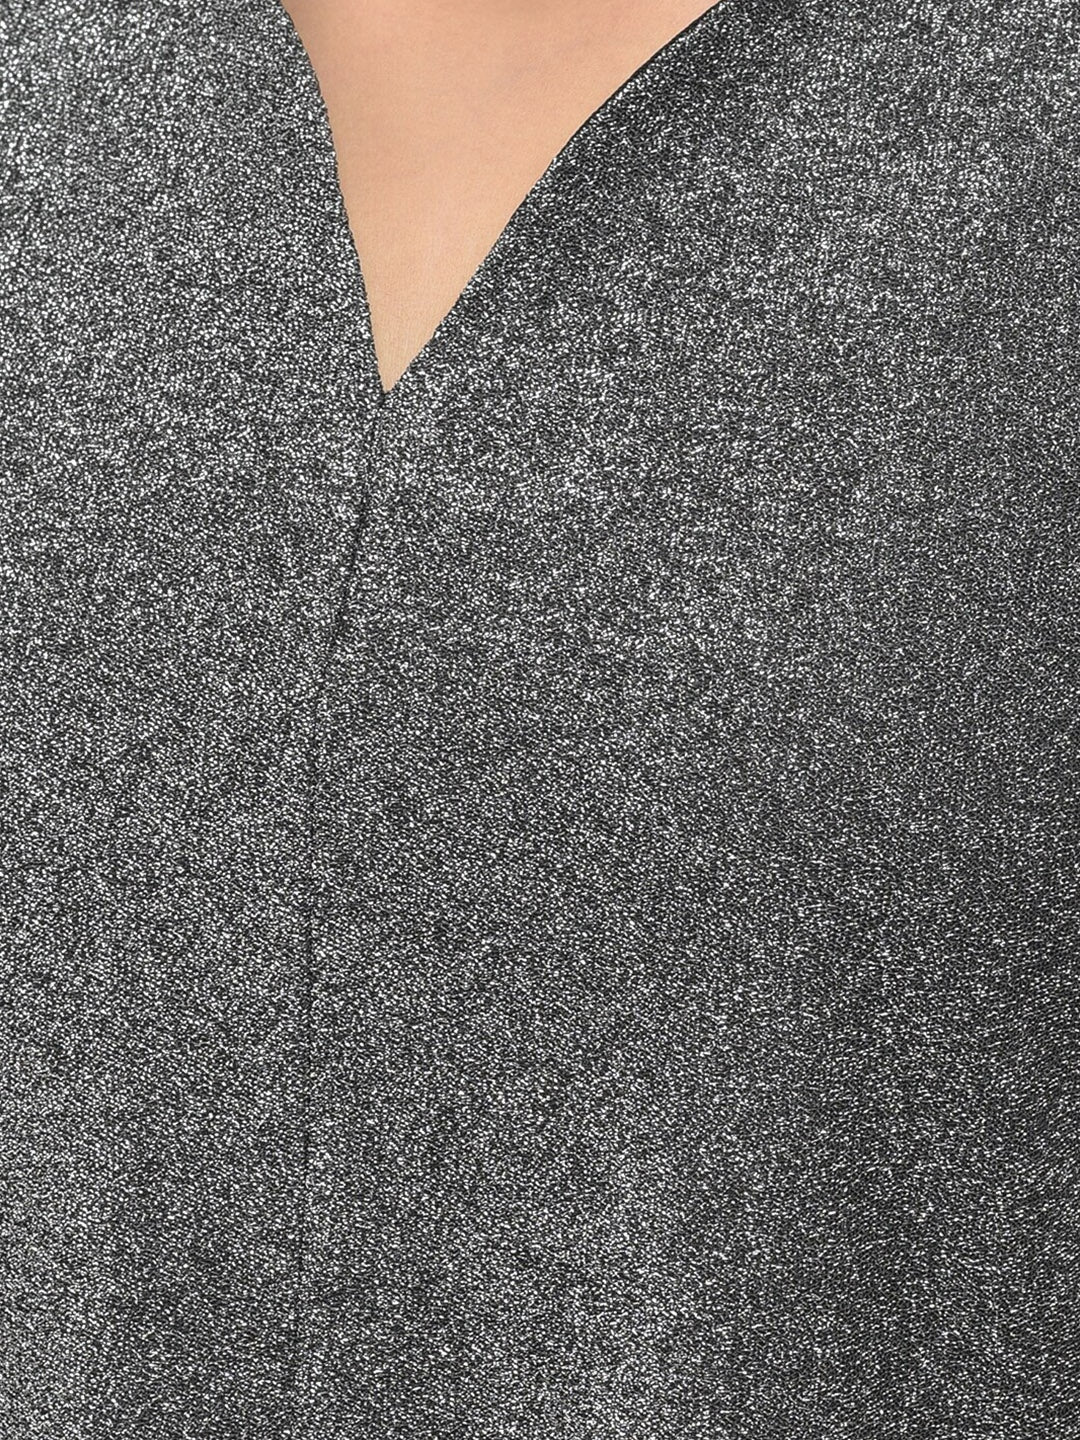 Black Half Sleeve Top With Pleats